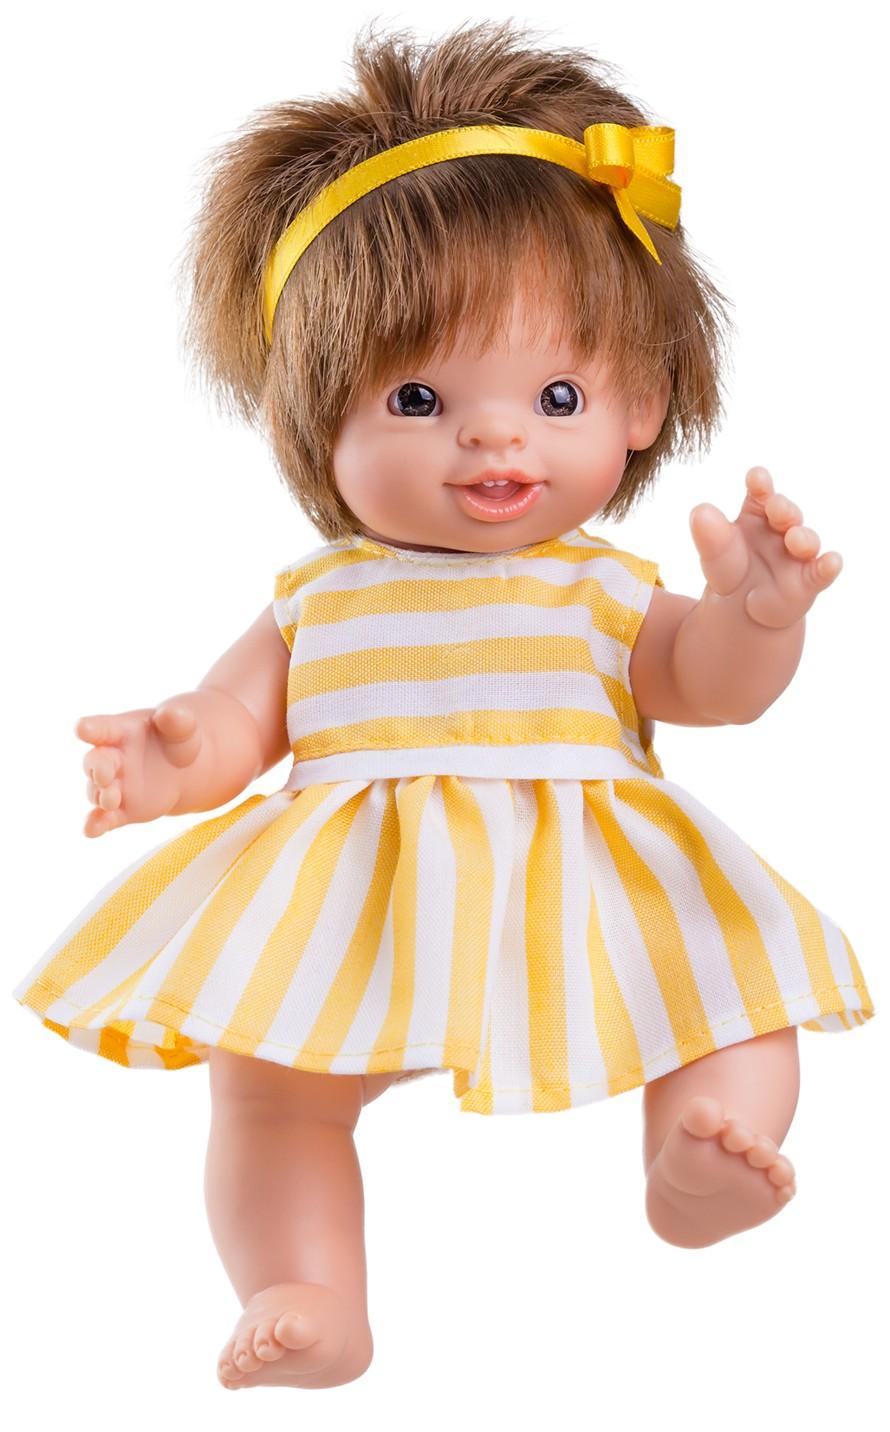 Realistická panenka Paolita Heli v šatičkách od firmy Paola Reina ze Španělska